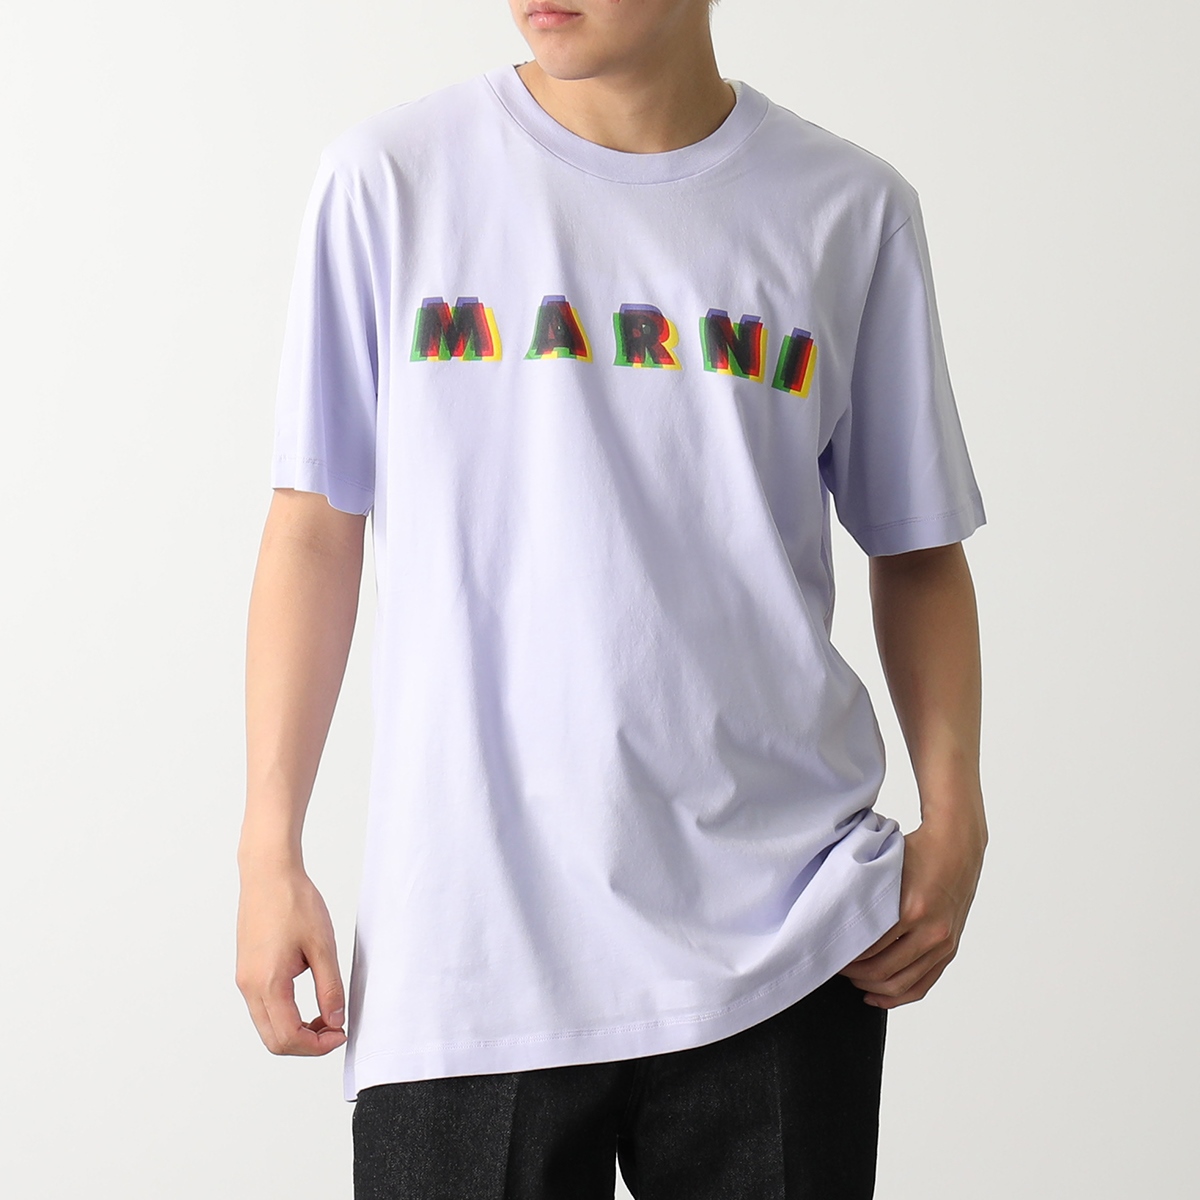 MARNI マルニ 半袖Tシャツ HUMU0198PE USCV16 メンズ 3Dロゴ ロゴT コットン クルーネック カラー3色